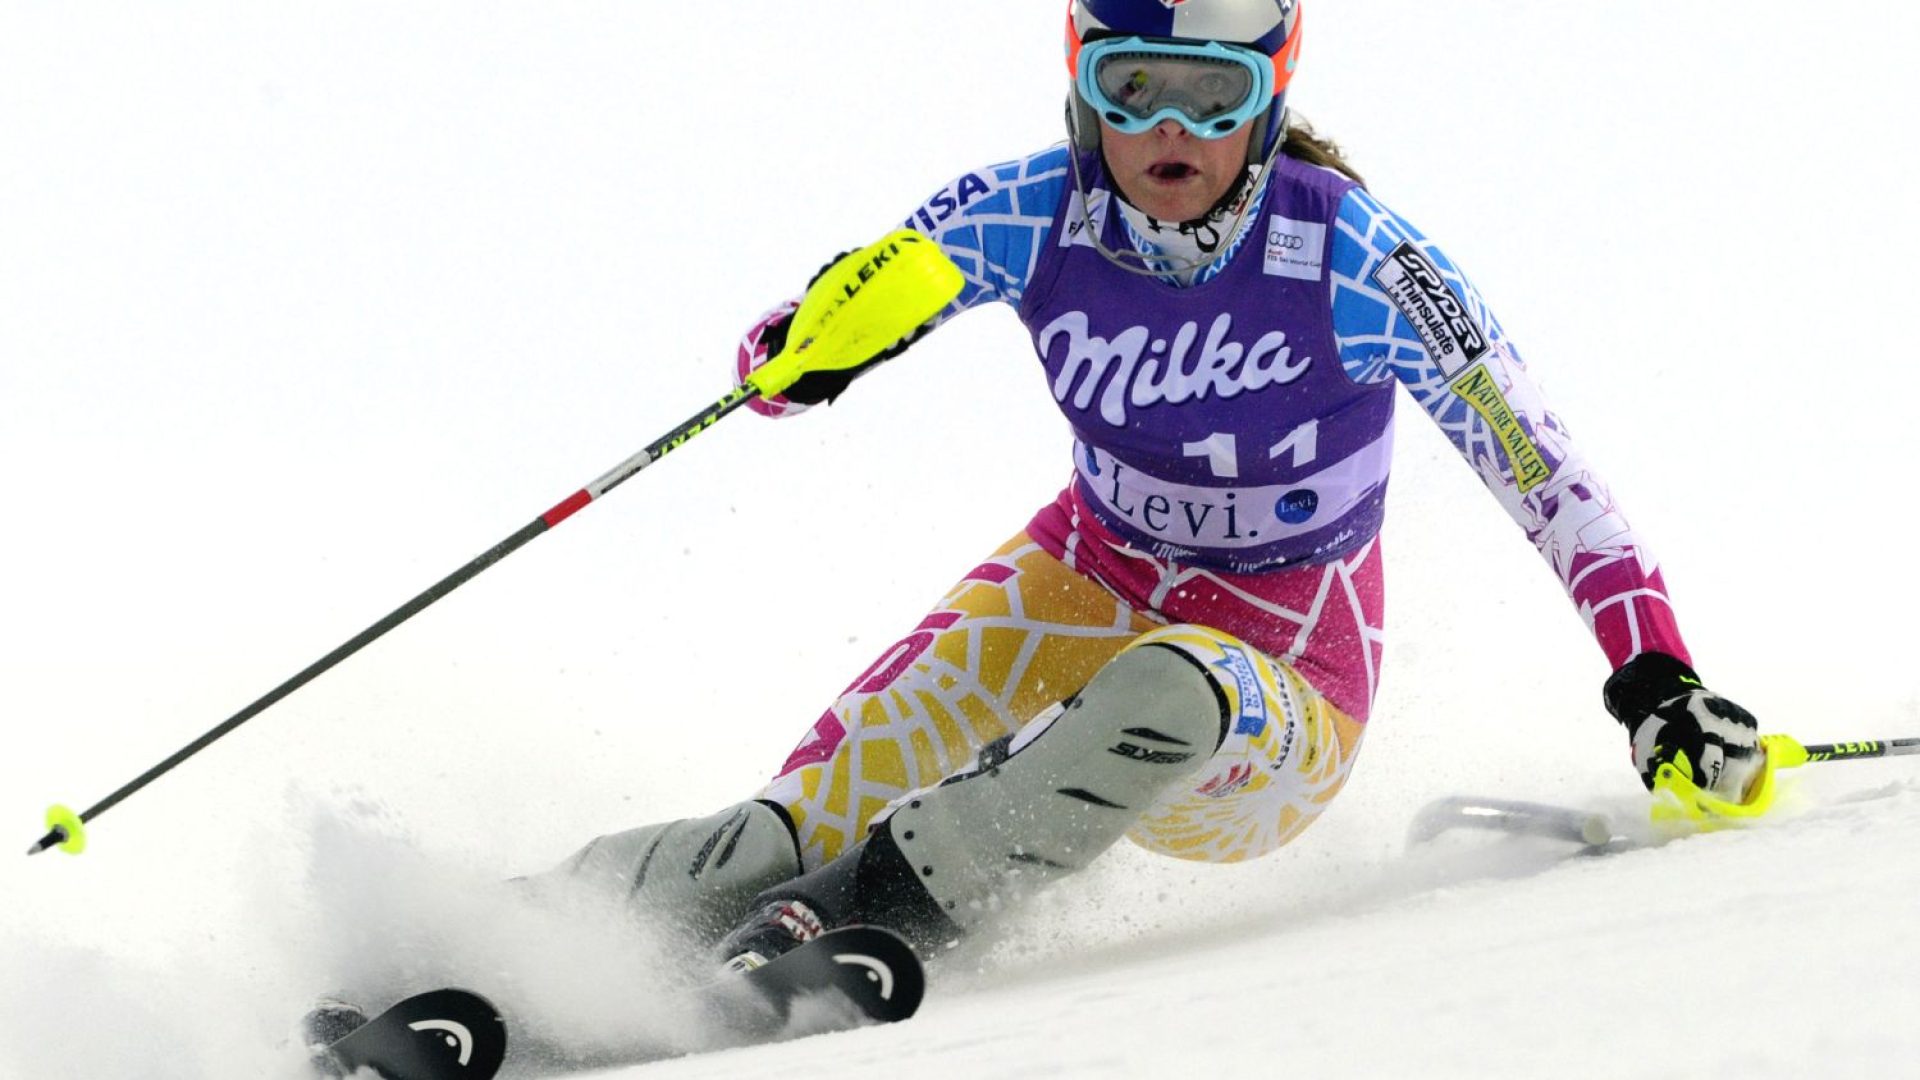 Levi Finland 101113
Slalomvärldscupen damer

Foto Nisse Schmidt
PRB kod 4042